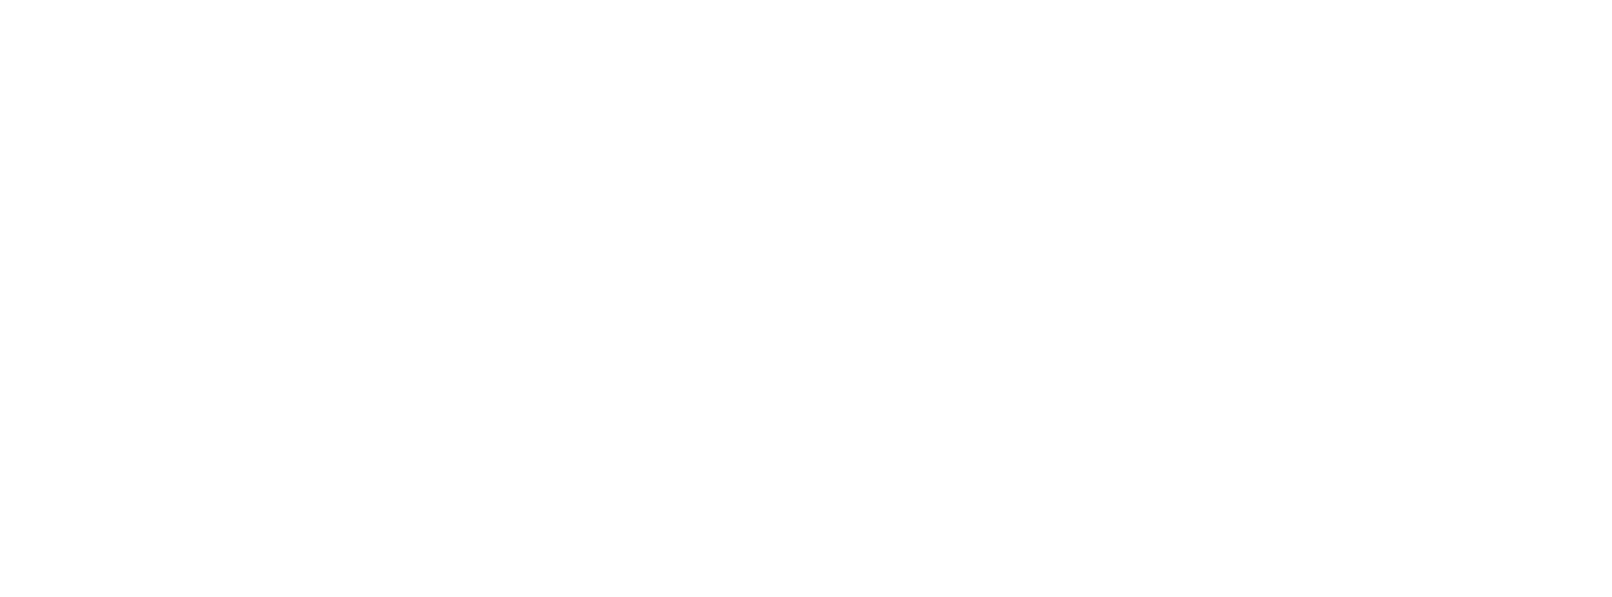 Edad: 27 Educacion: Estudio den Economia Business Management Financial Control Profesion: Financial Controller